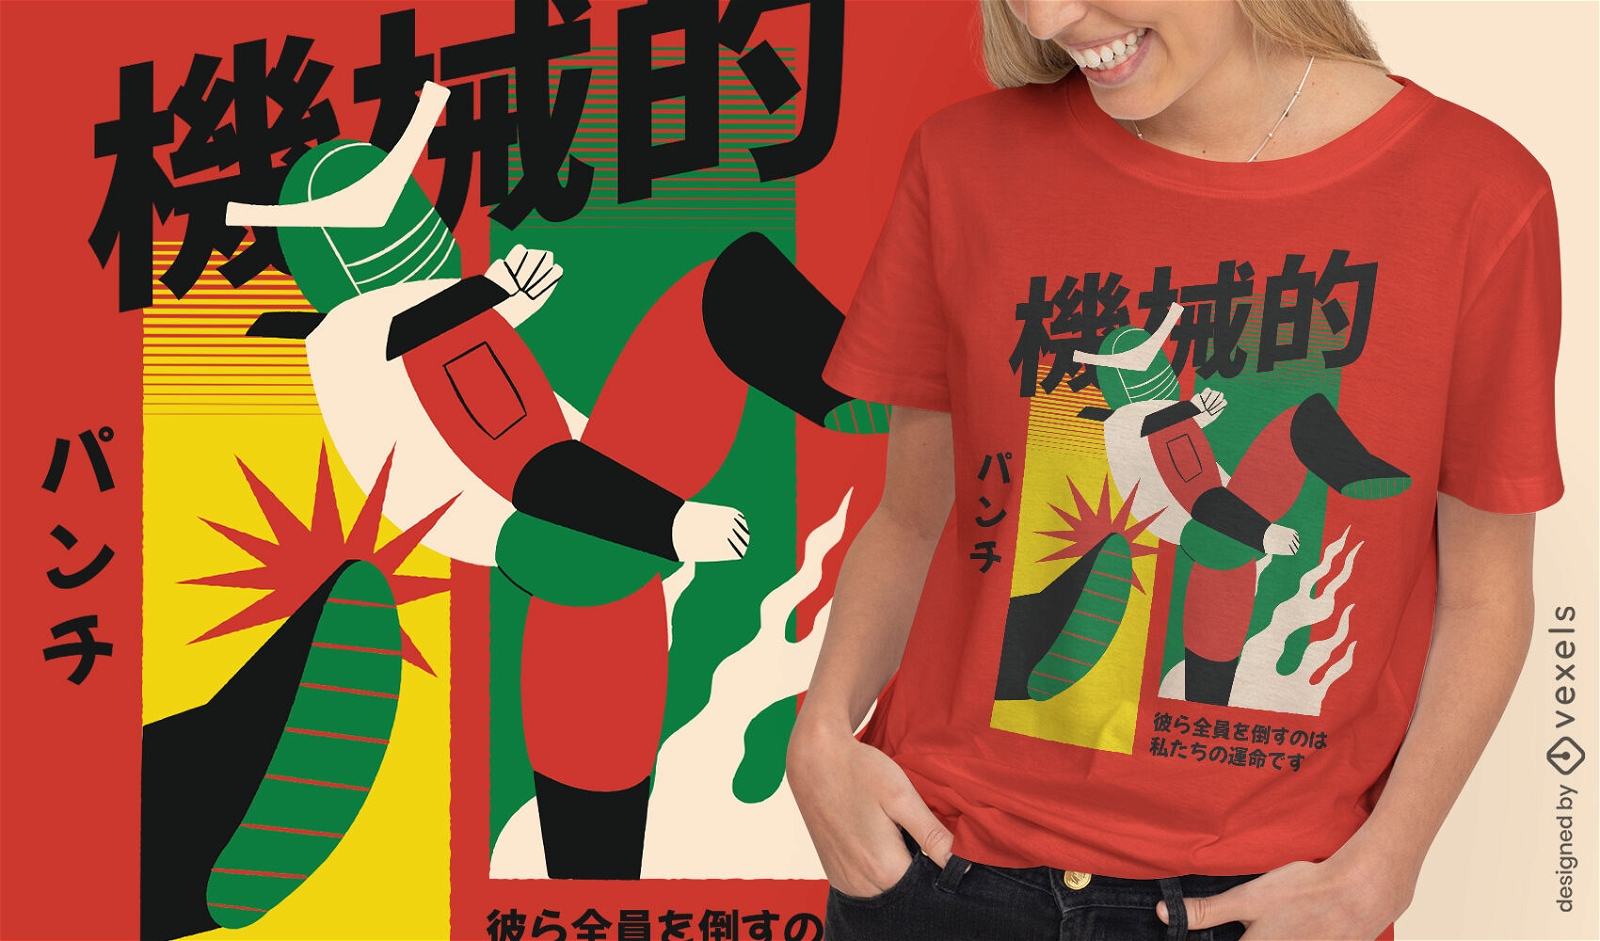 Japanese robot fighting t-shirt design